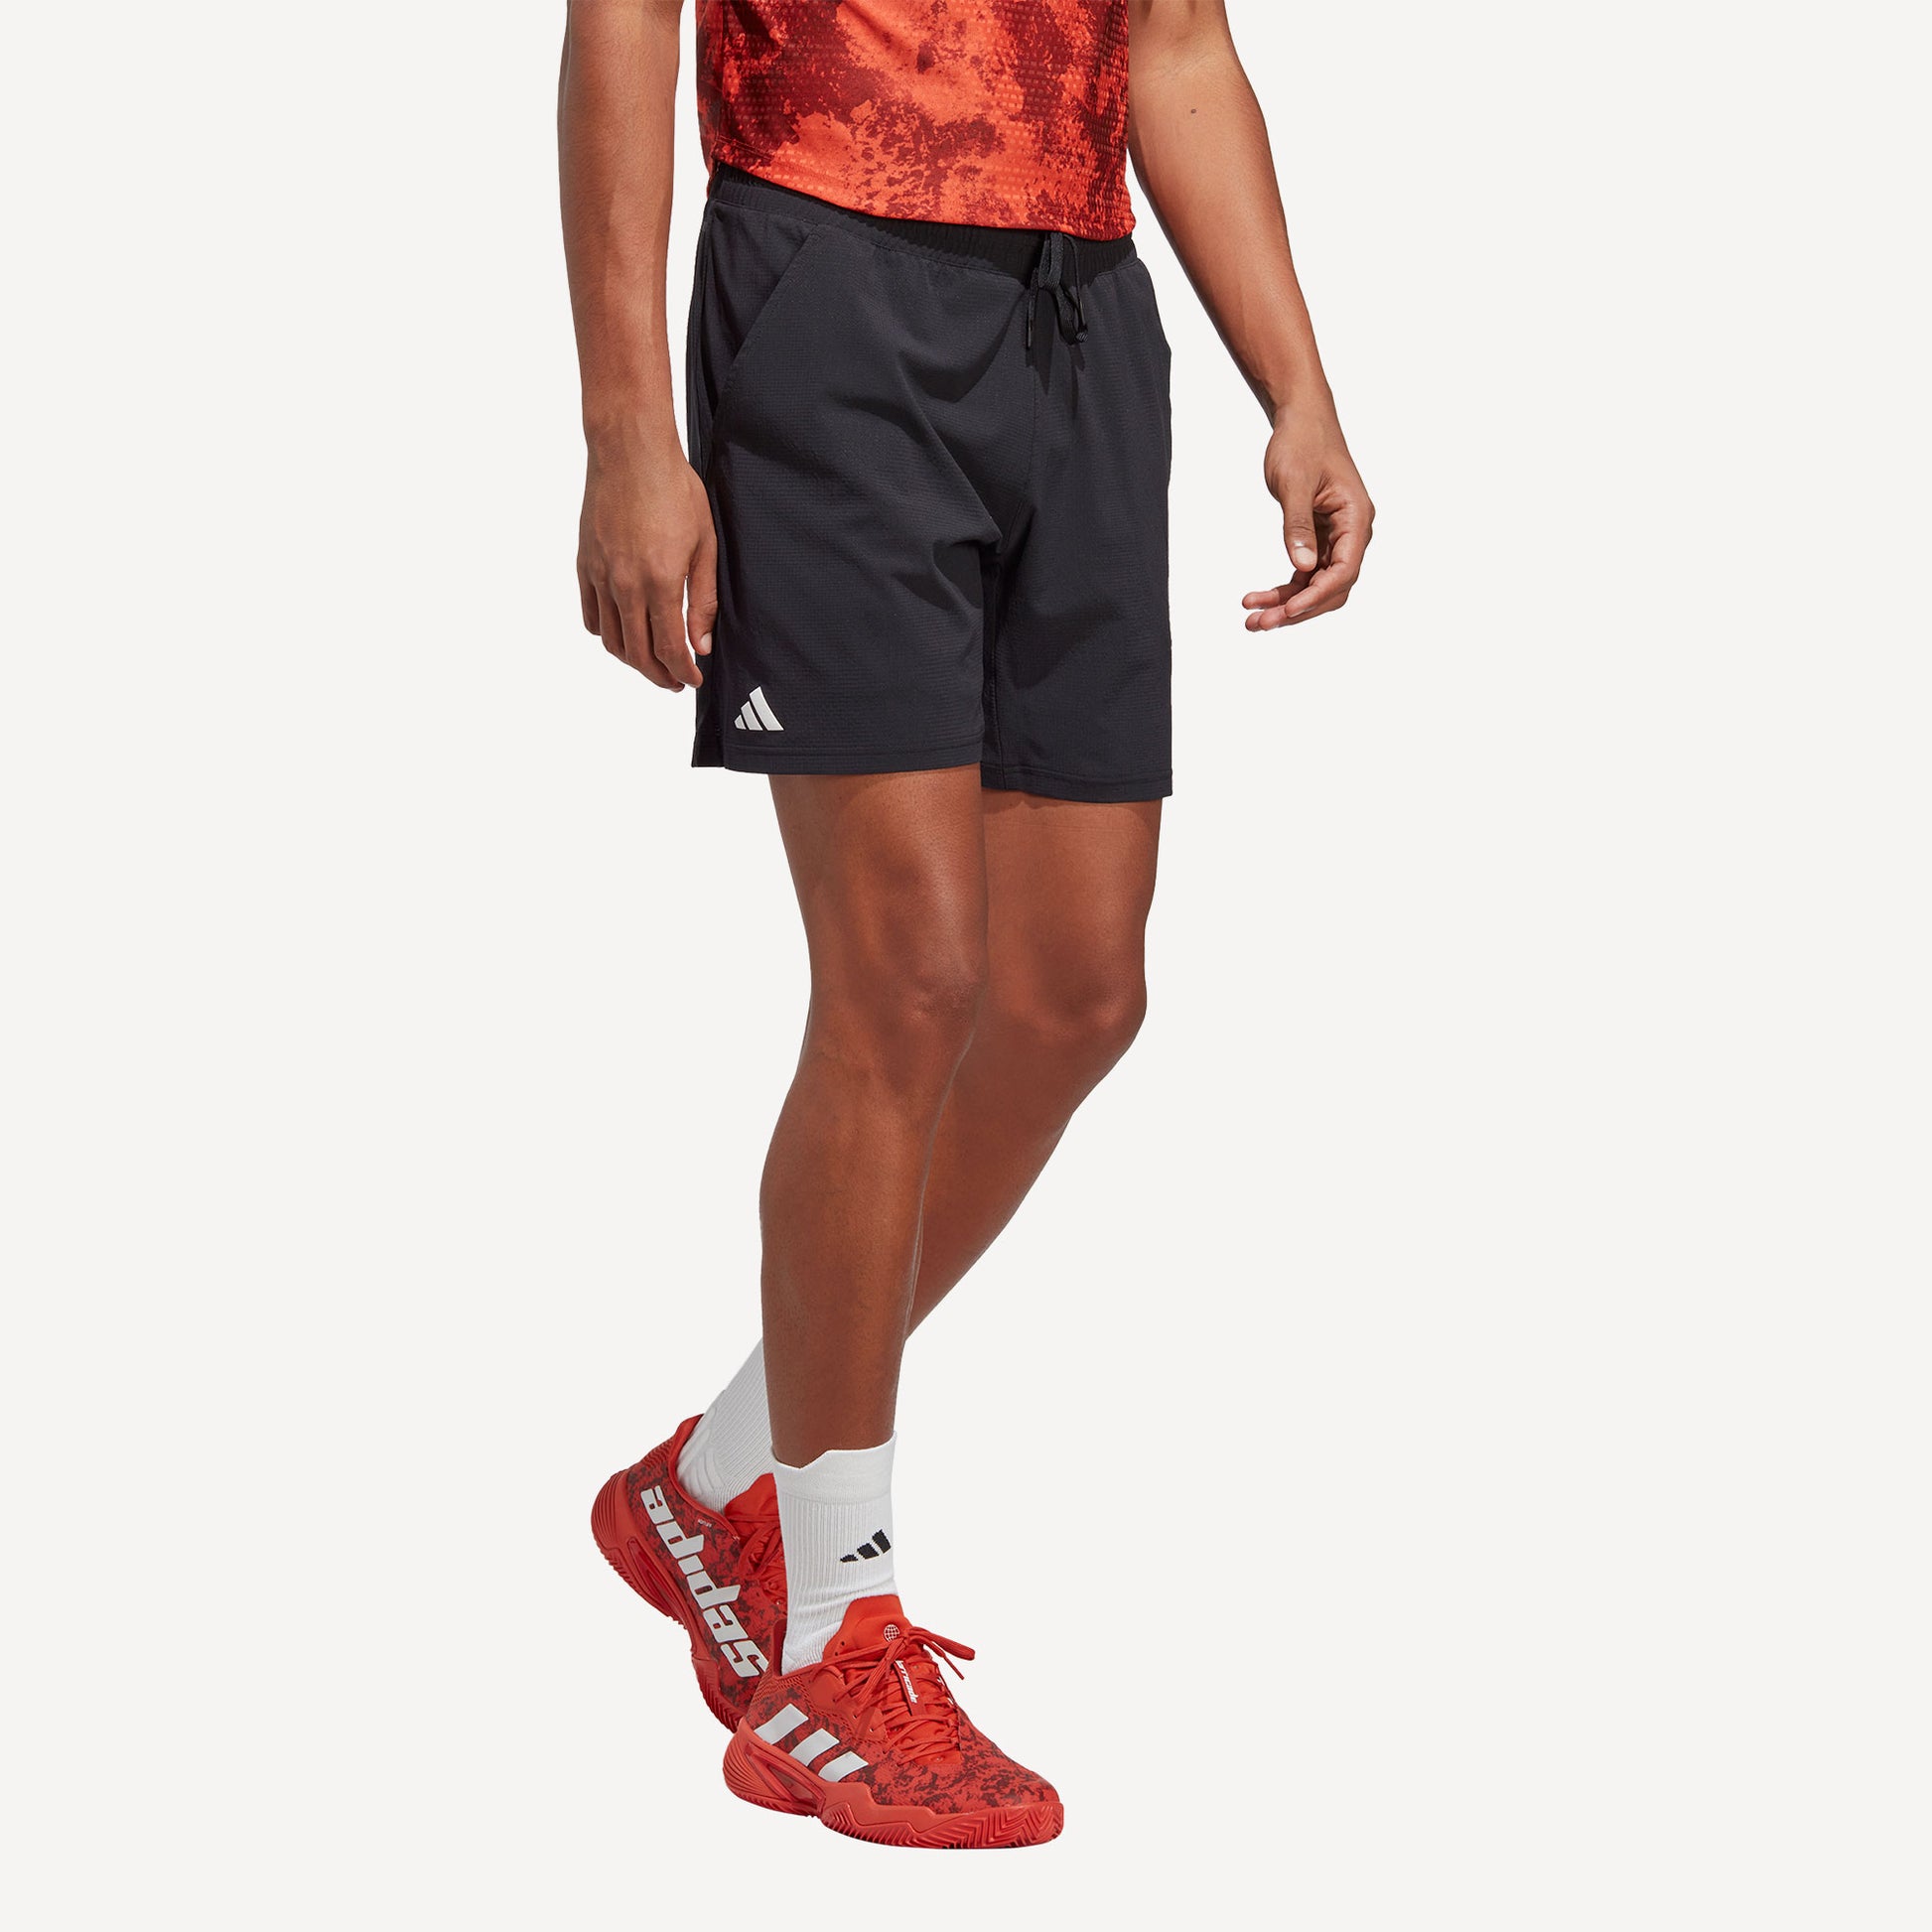 adidas Ergo Men's 7-Inch Tennis Shorts Black (1)